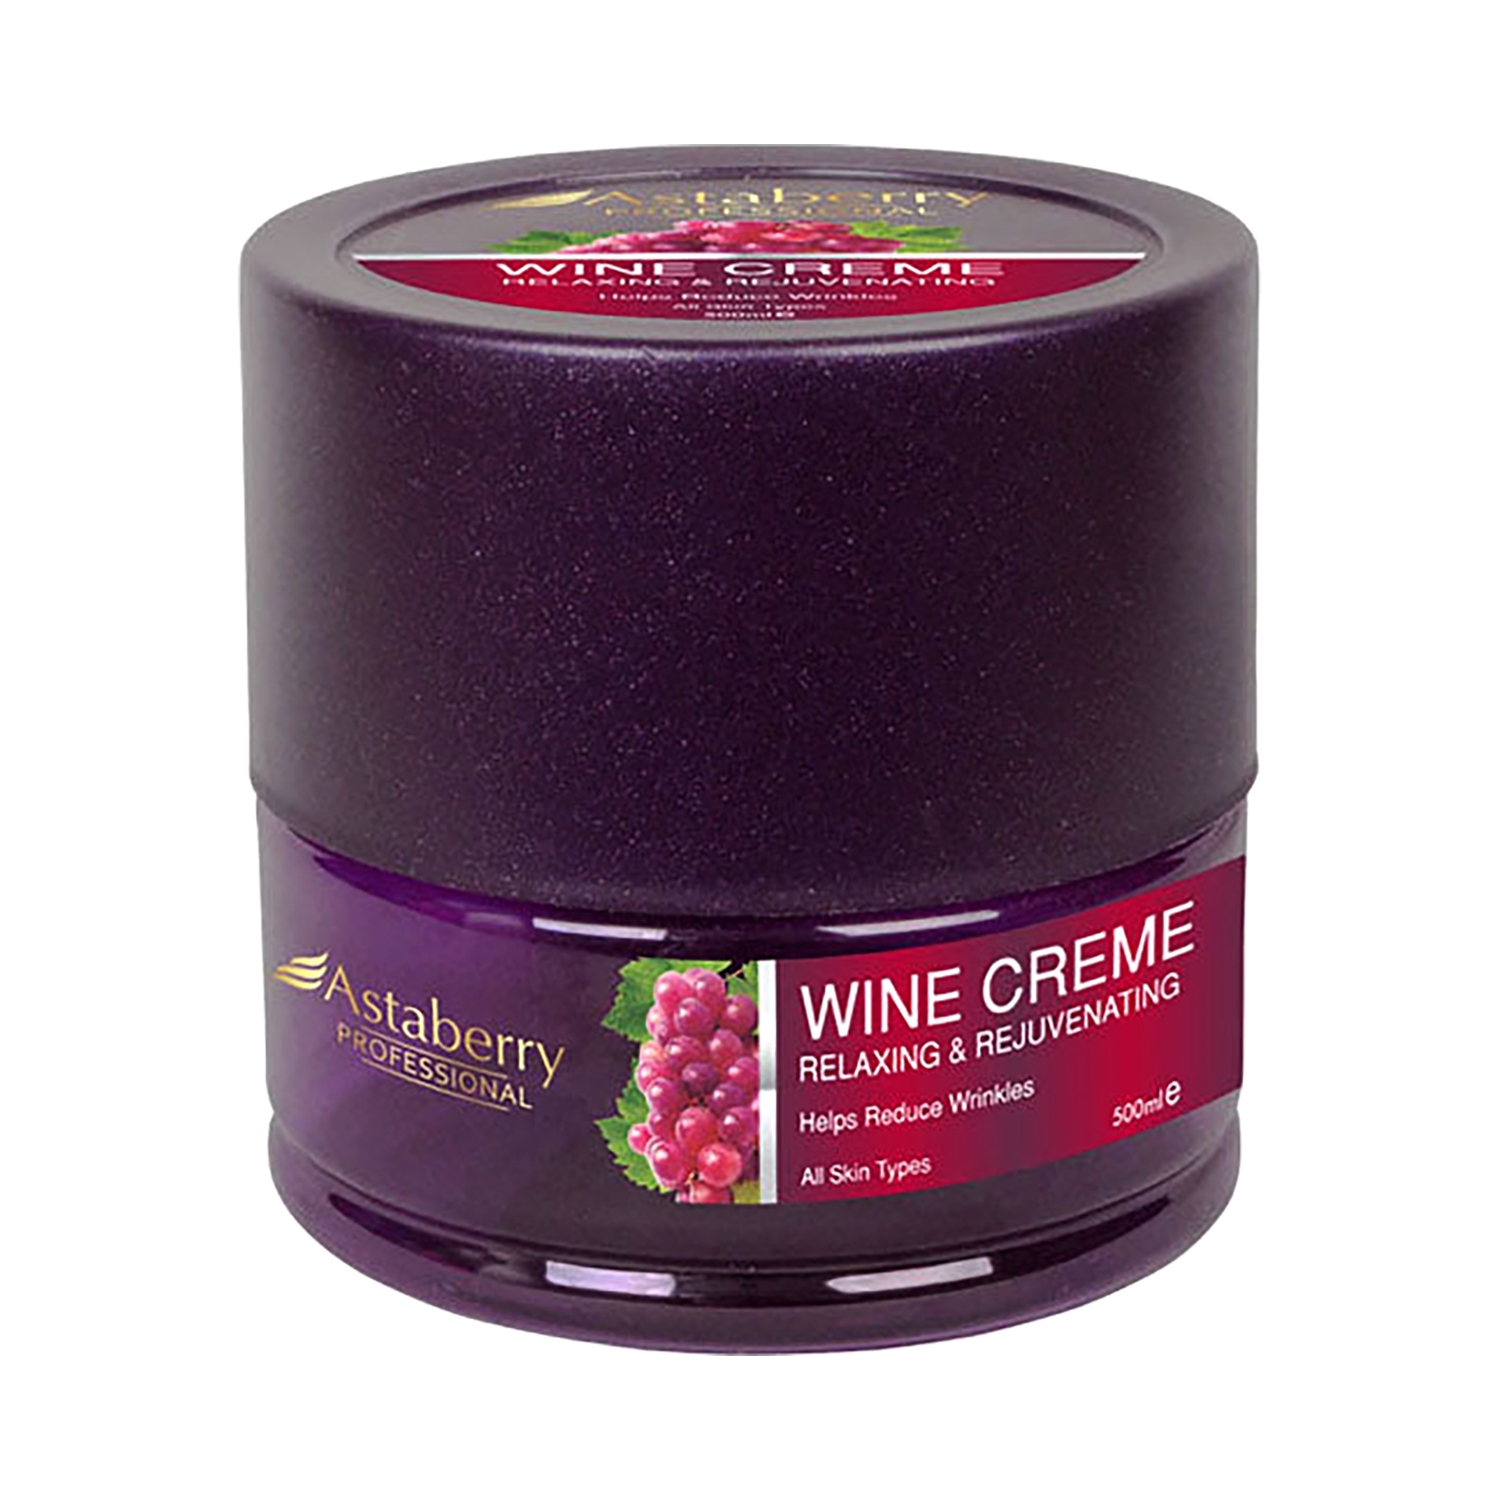 Astaberry Professional Wine Creme (500ml)